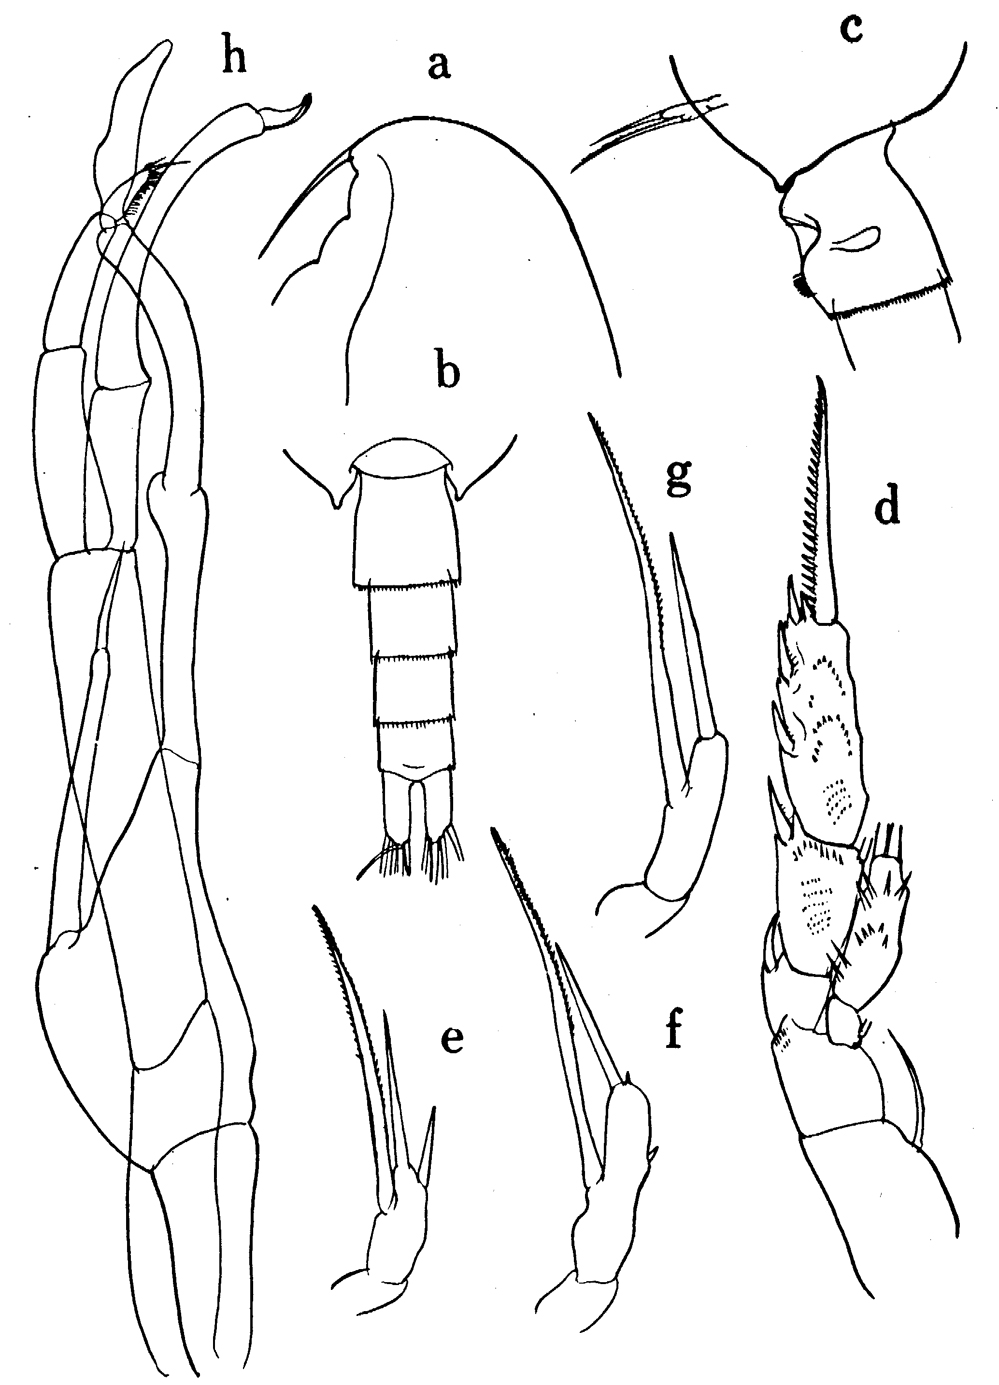 Species Scaphocalanus elongatus - Plate 6 of morphological figures